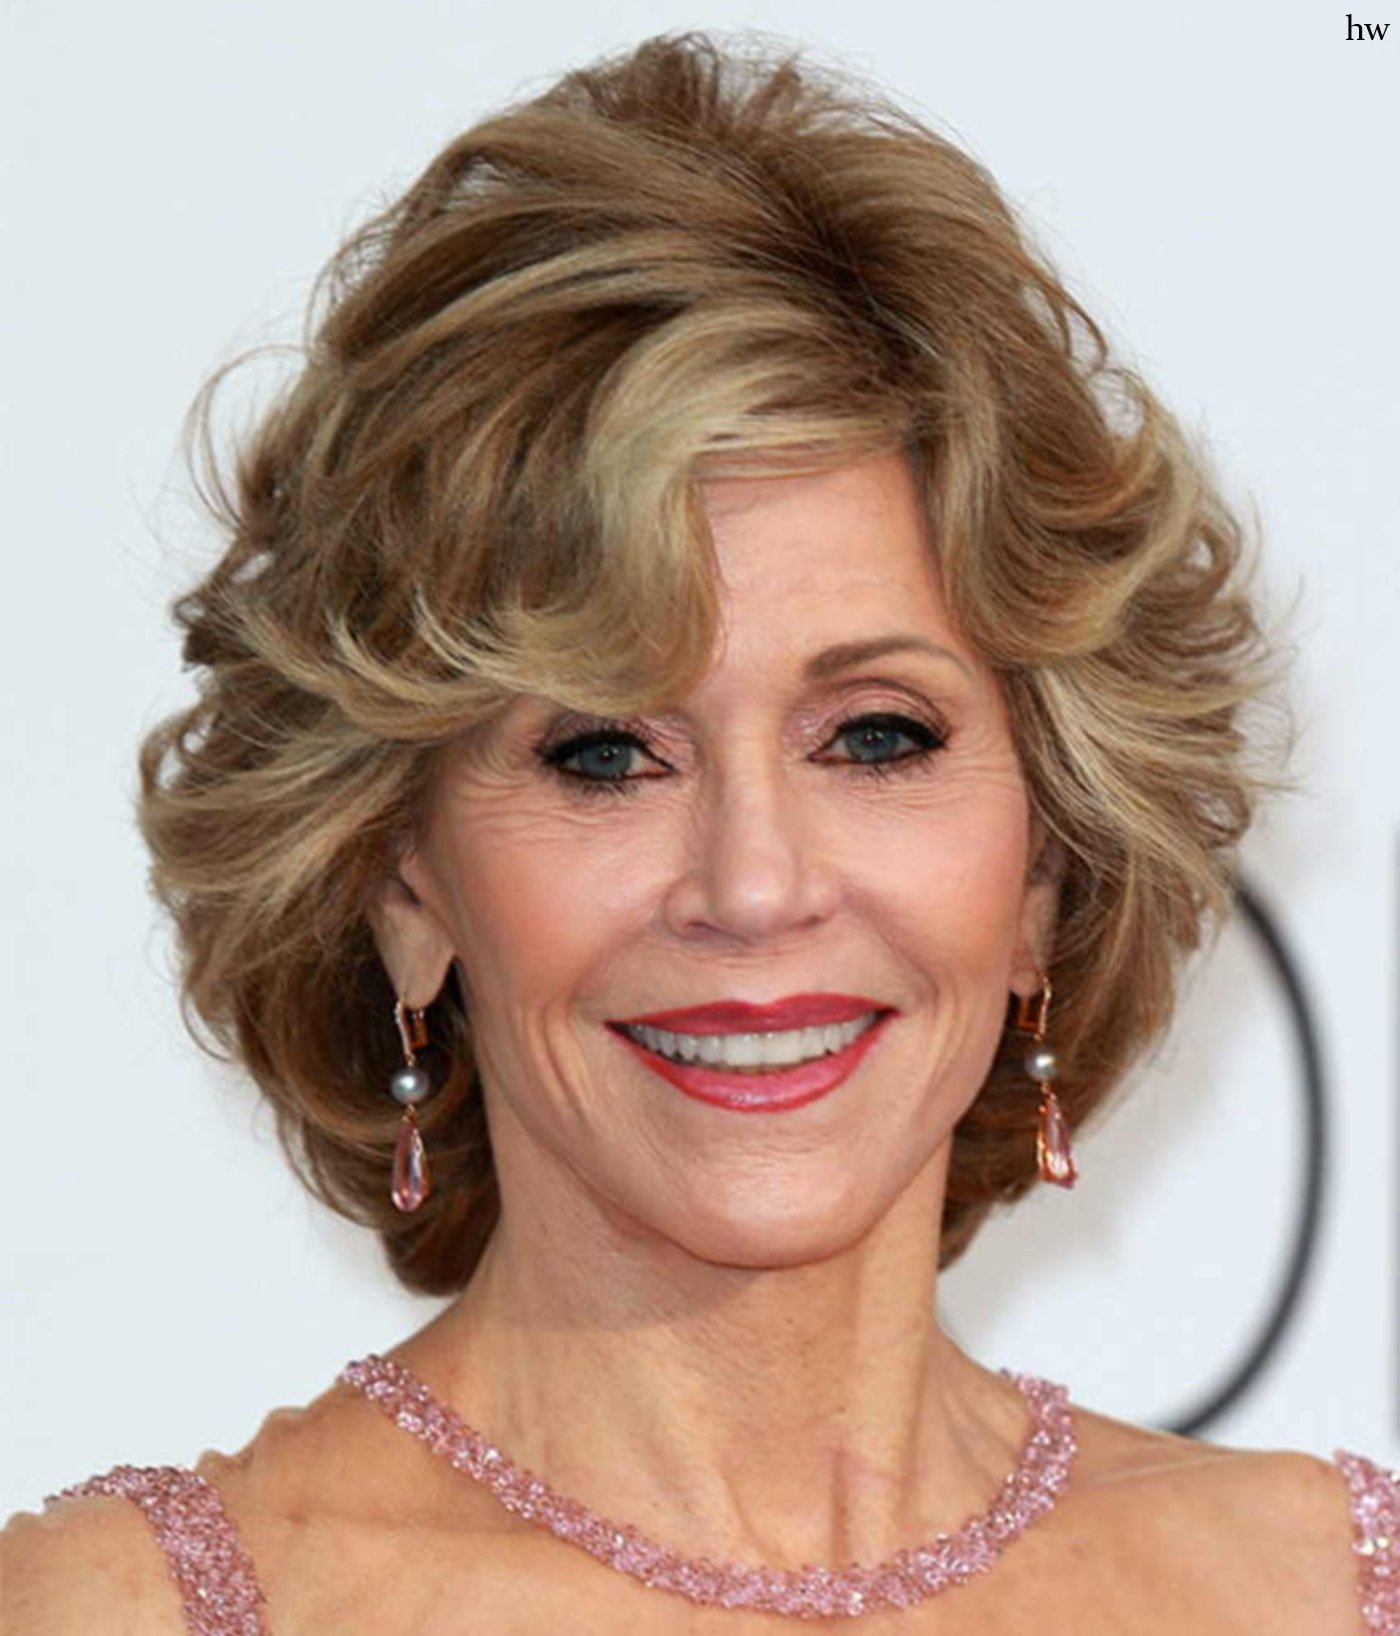 Прически стрижки женские 60 лет. Джейн фонда 50+. Джейн фонда 2022. Jane Fonda стрижка. Джейн фонда фото 2022.